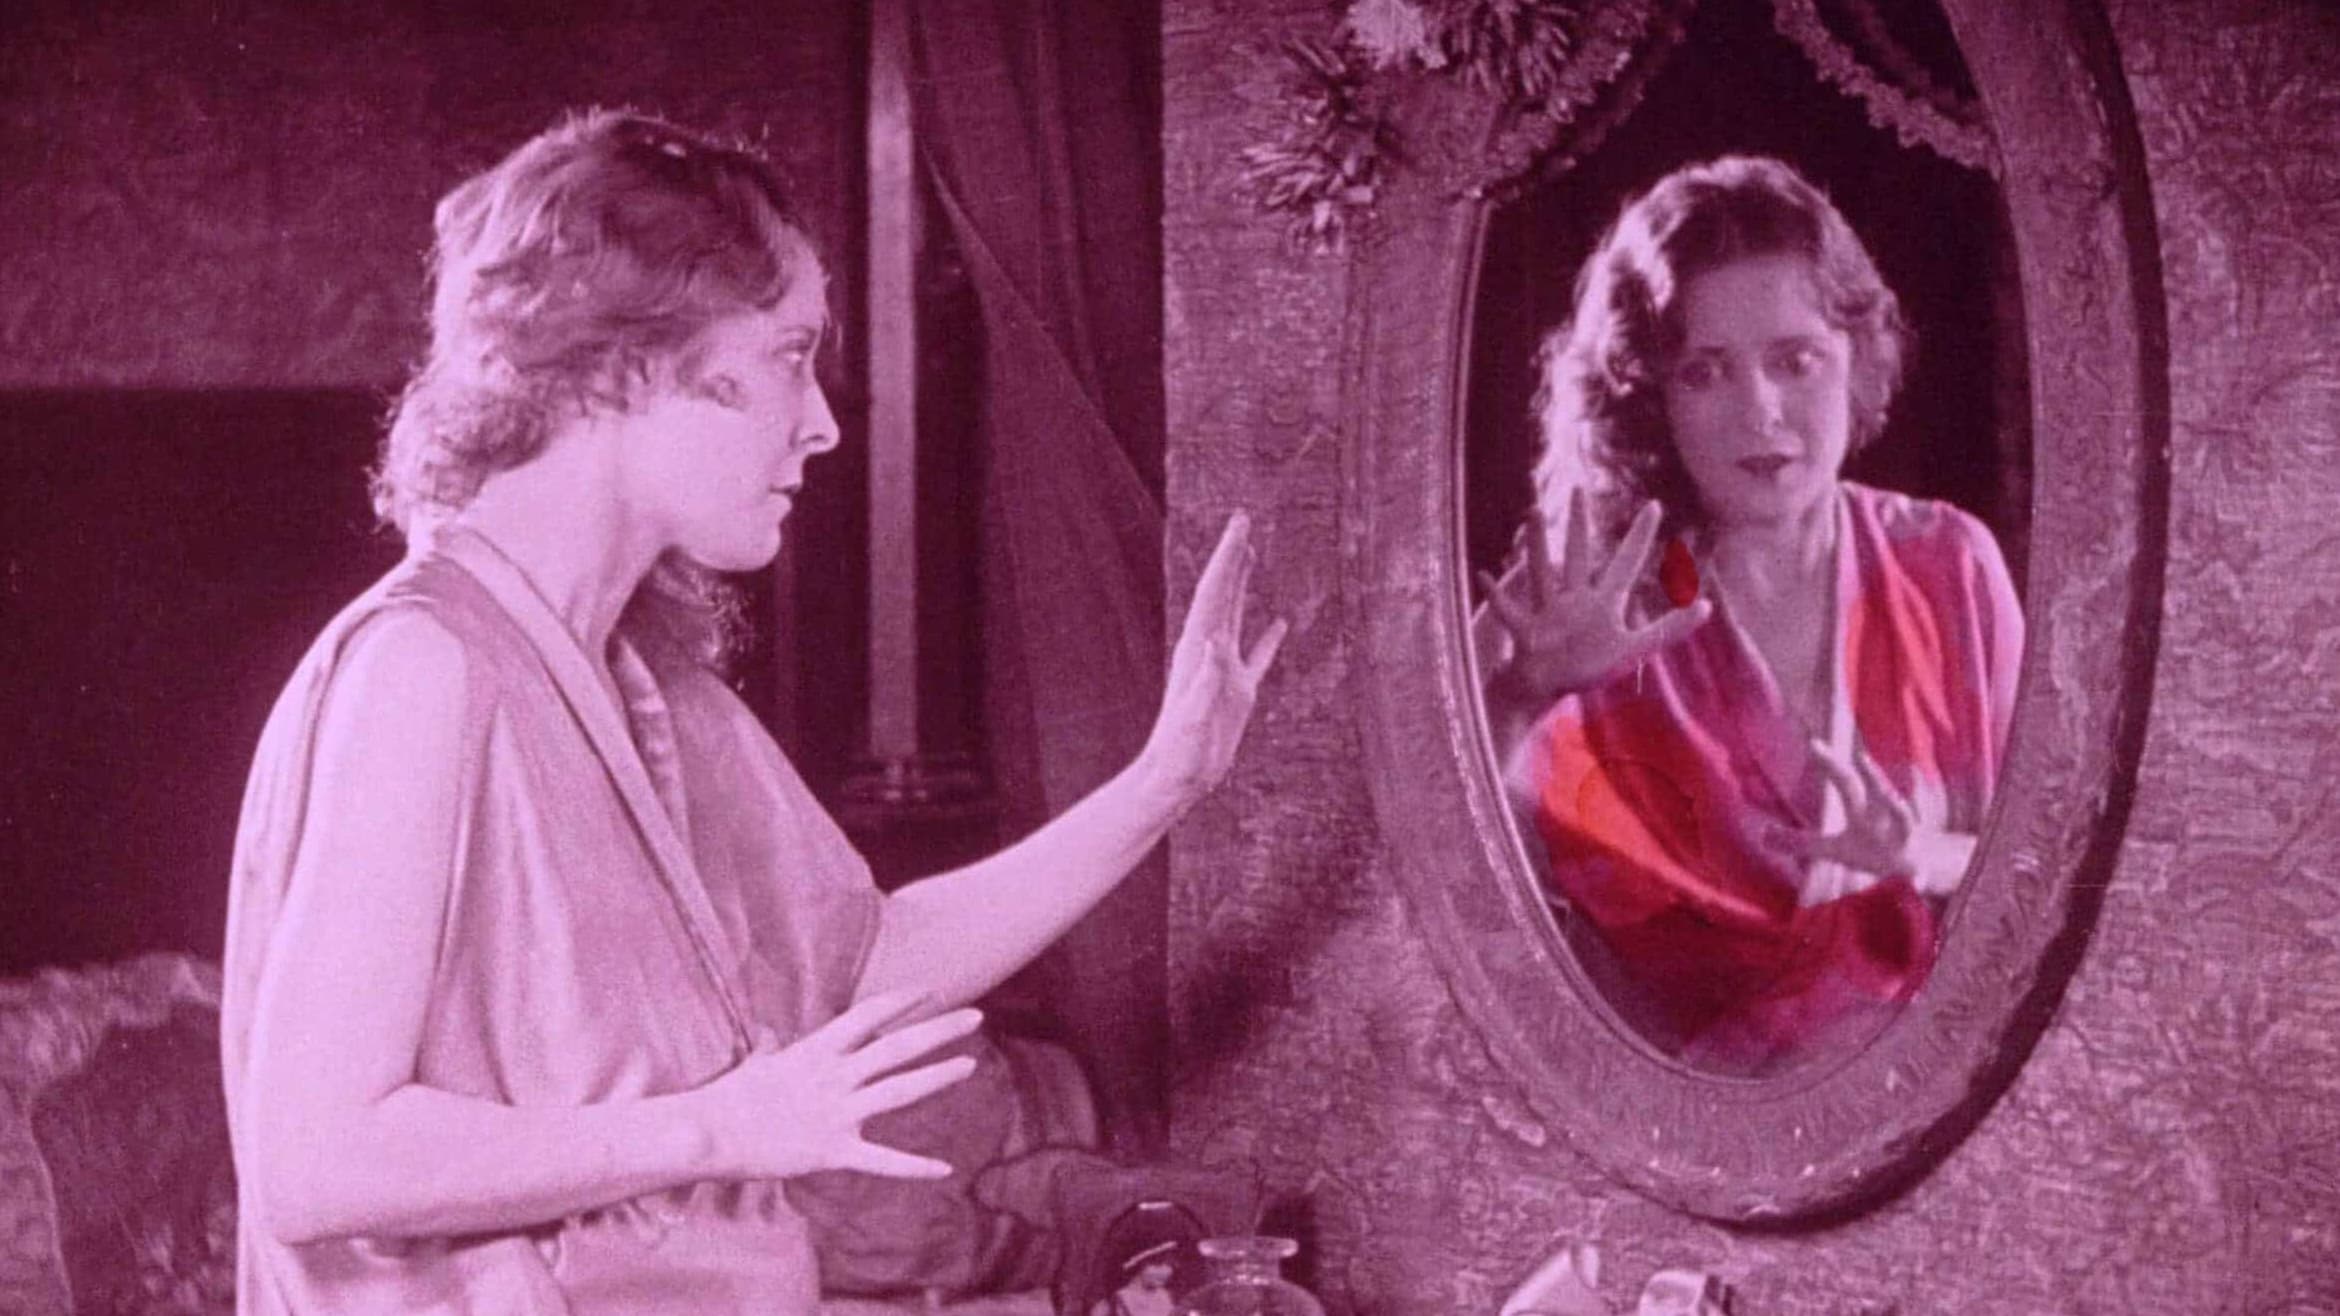 The Red Kimona (1925)